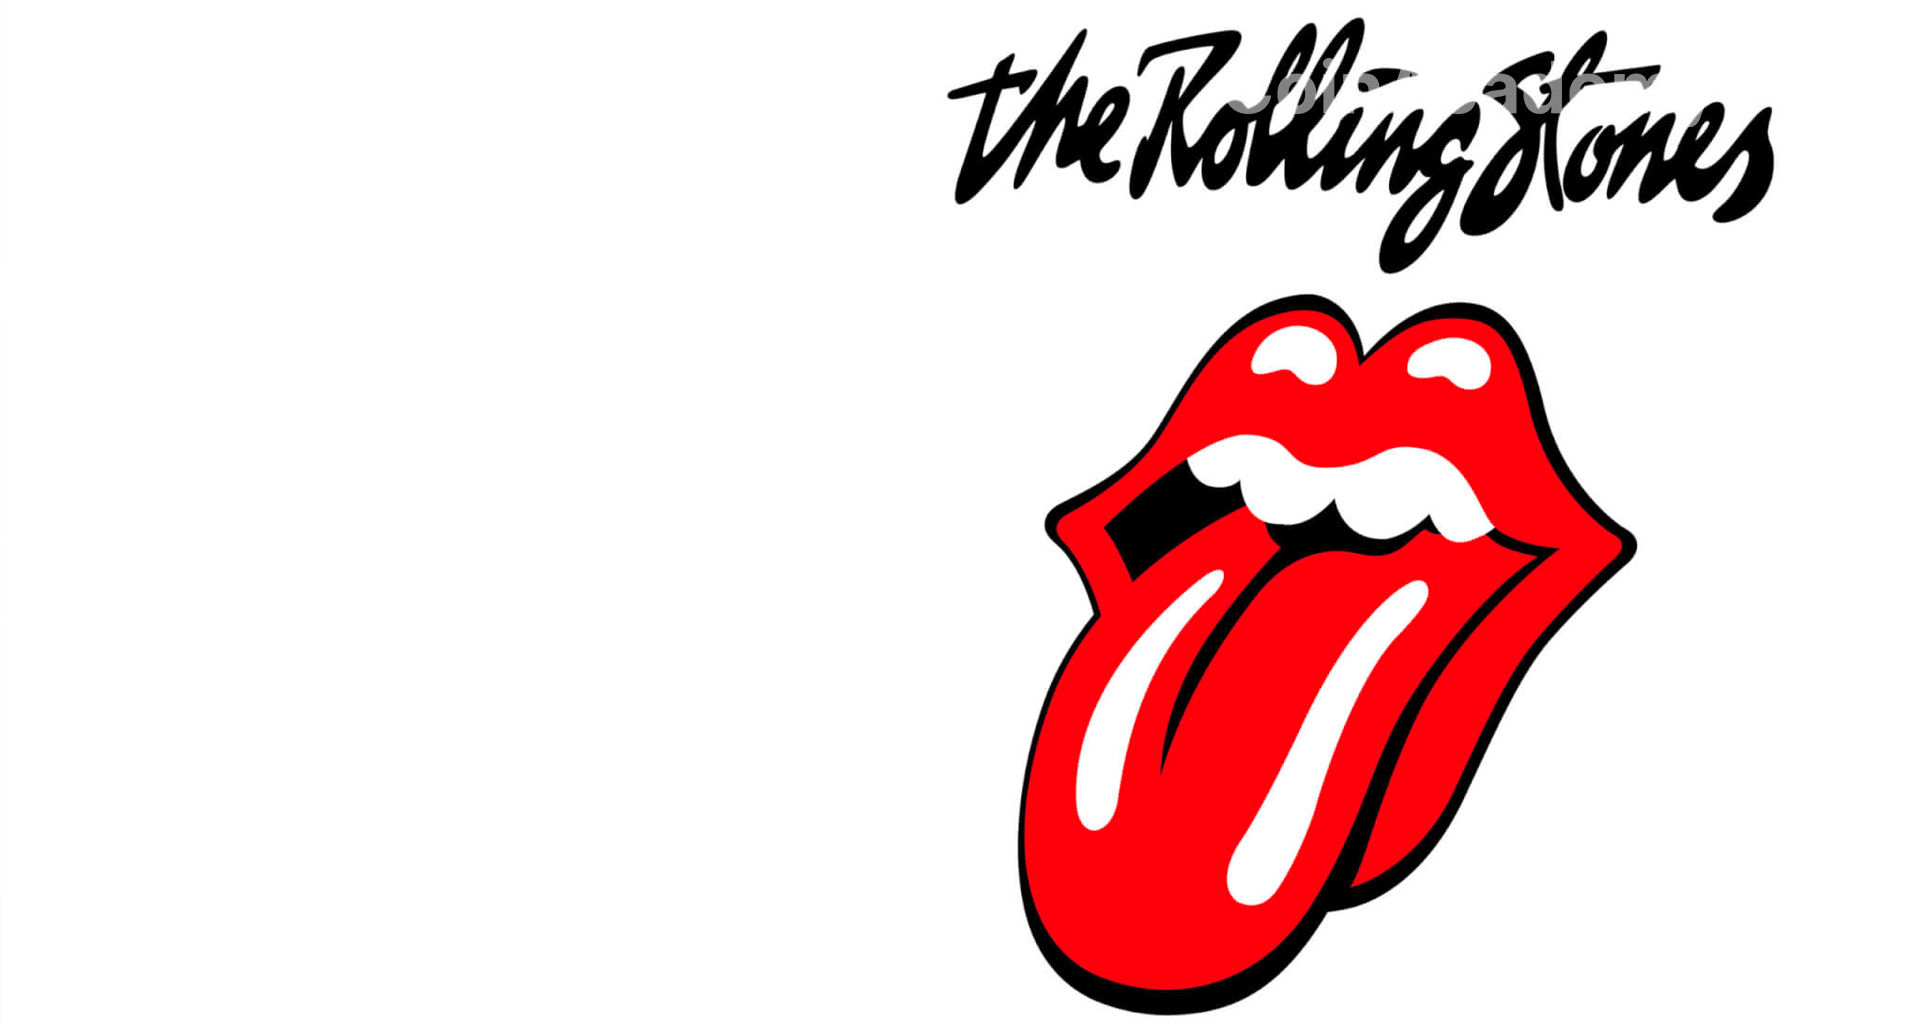 NFT Rolling Stones